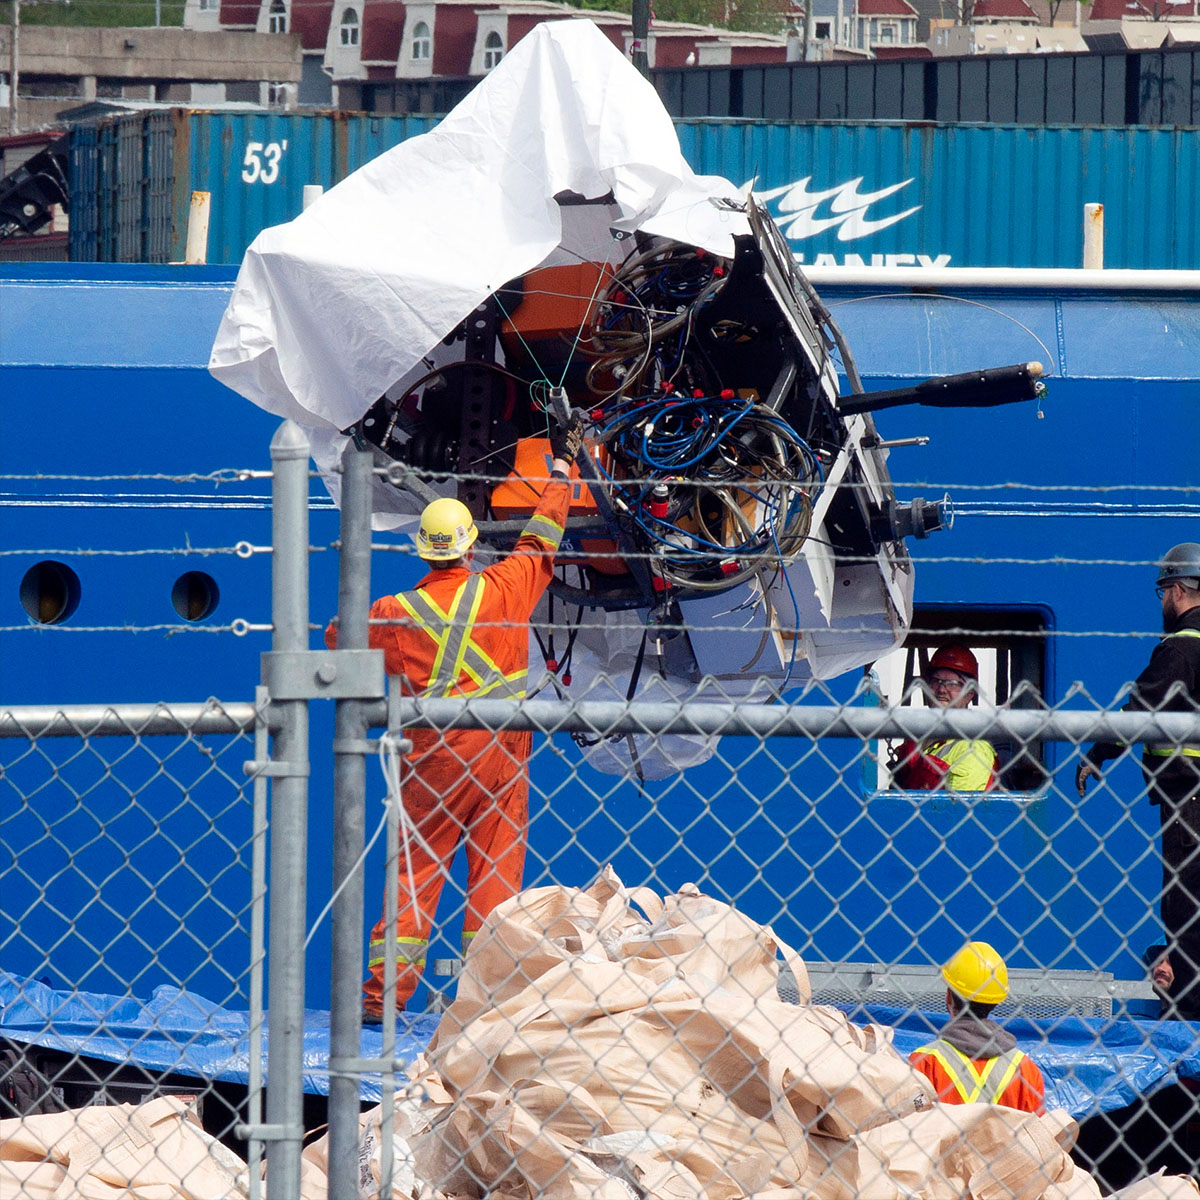 Titan Sub Tragedy: “Presumed Human Remains” & Mangled Debris Recovered